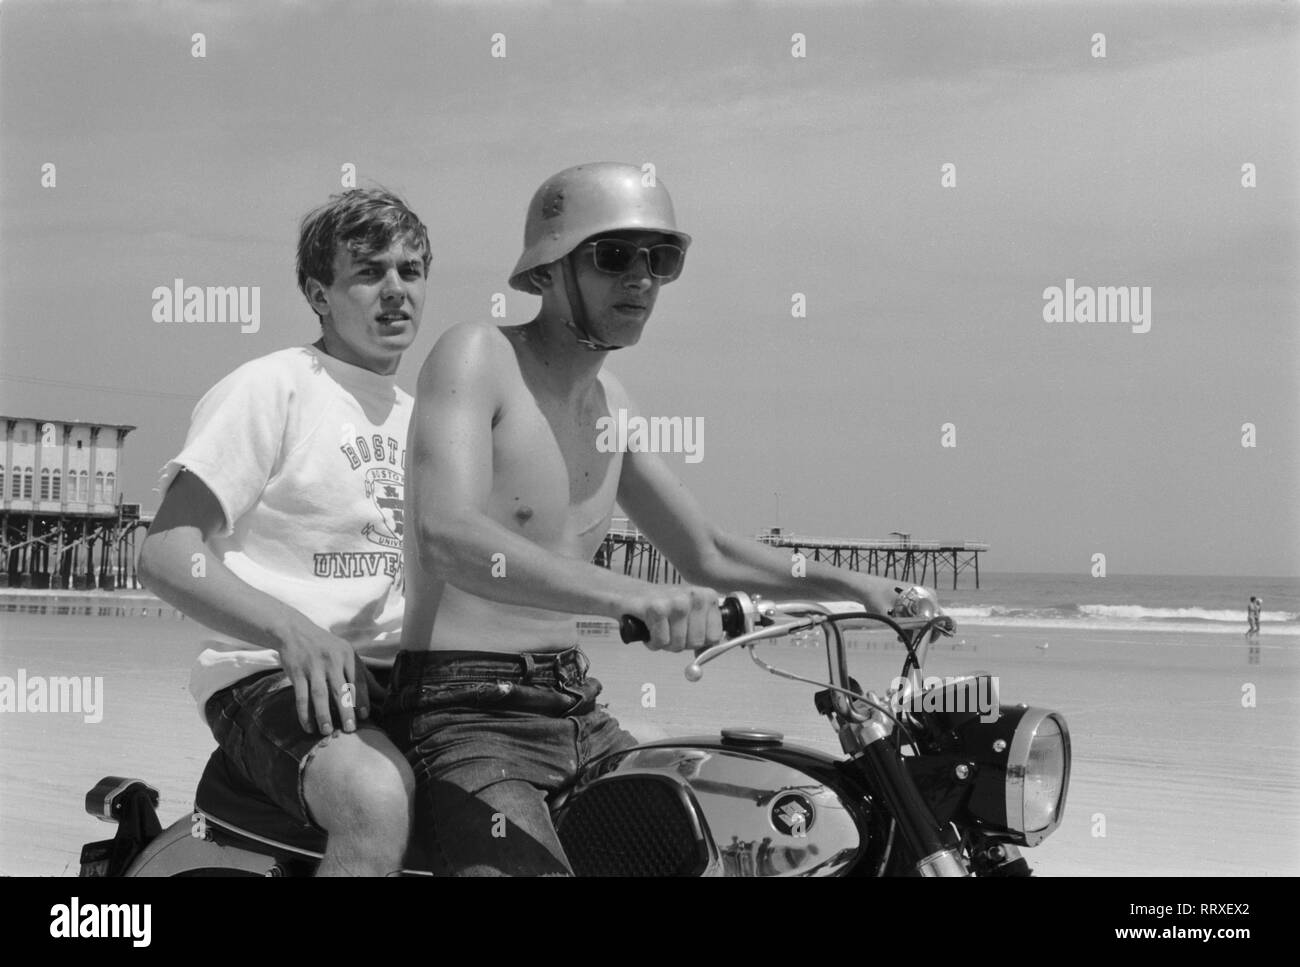 Persone - Menschen, Motorrad, Strand, Timone, Stahlhelm, Sonnenbrille, Suzuki am Daytona Beach in Florida, Stati Uniti d'America 1959. Foto Stock